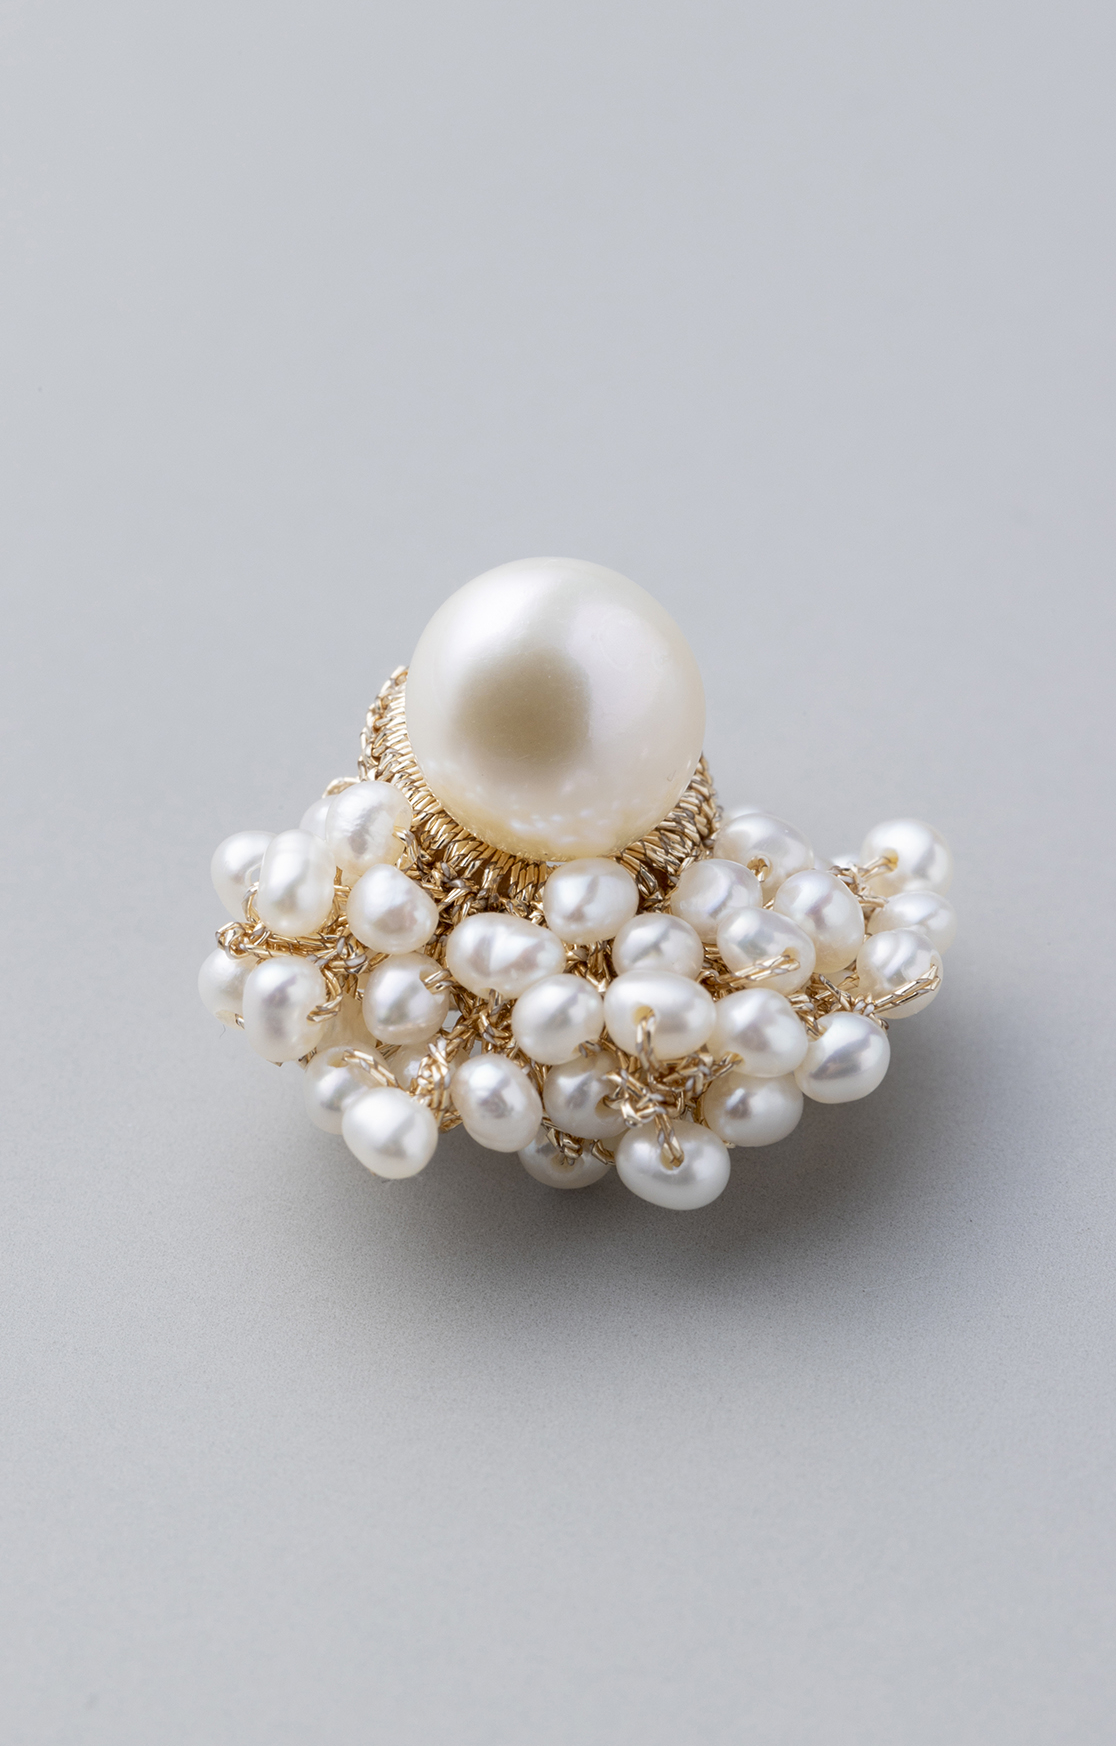 Pearl charm pierce